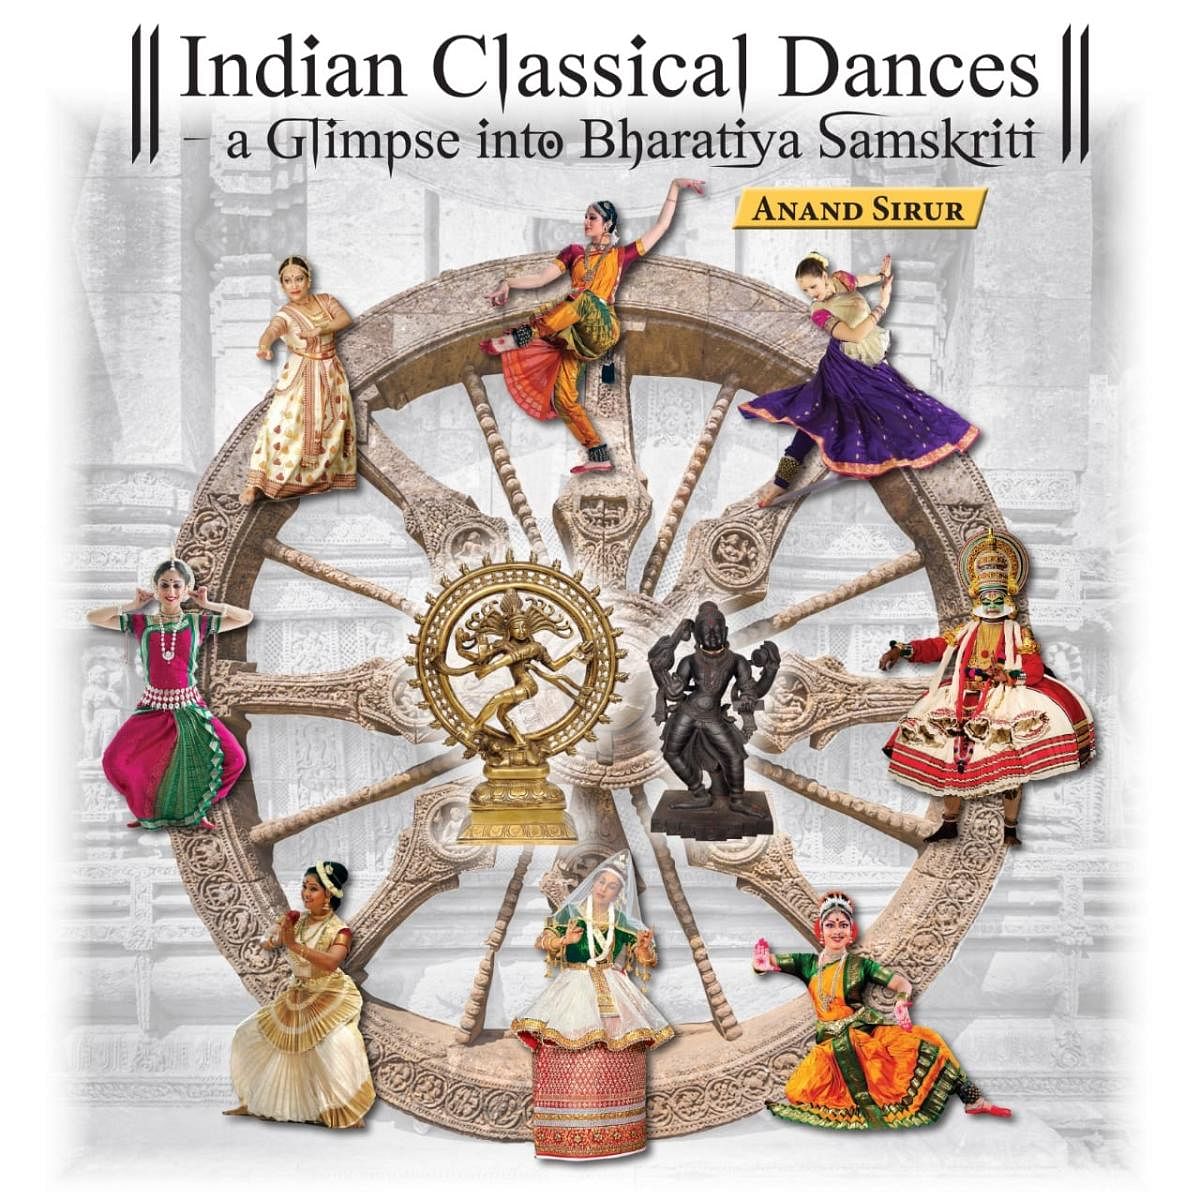 Indian Classical Dances - a Glimpse into Bharatiya Samskriti